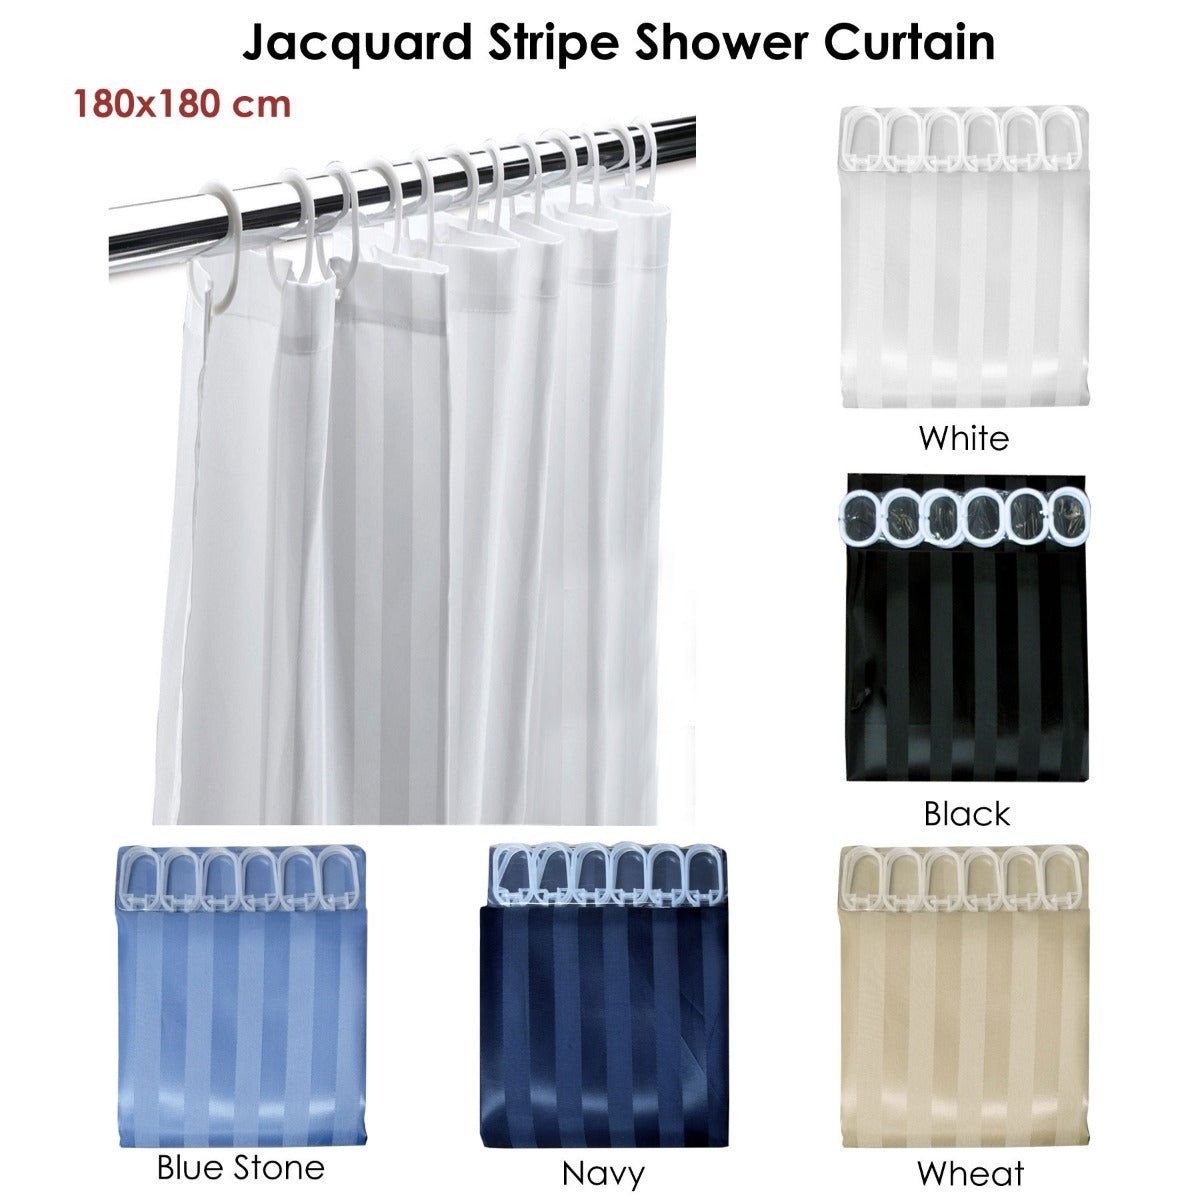 Jacquard Stripe Shower Curtain Wheat